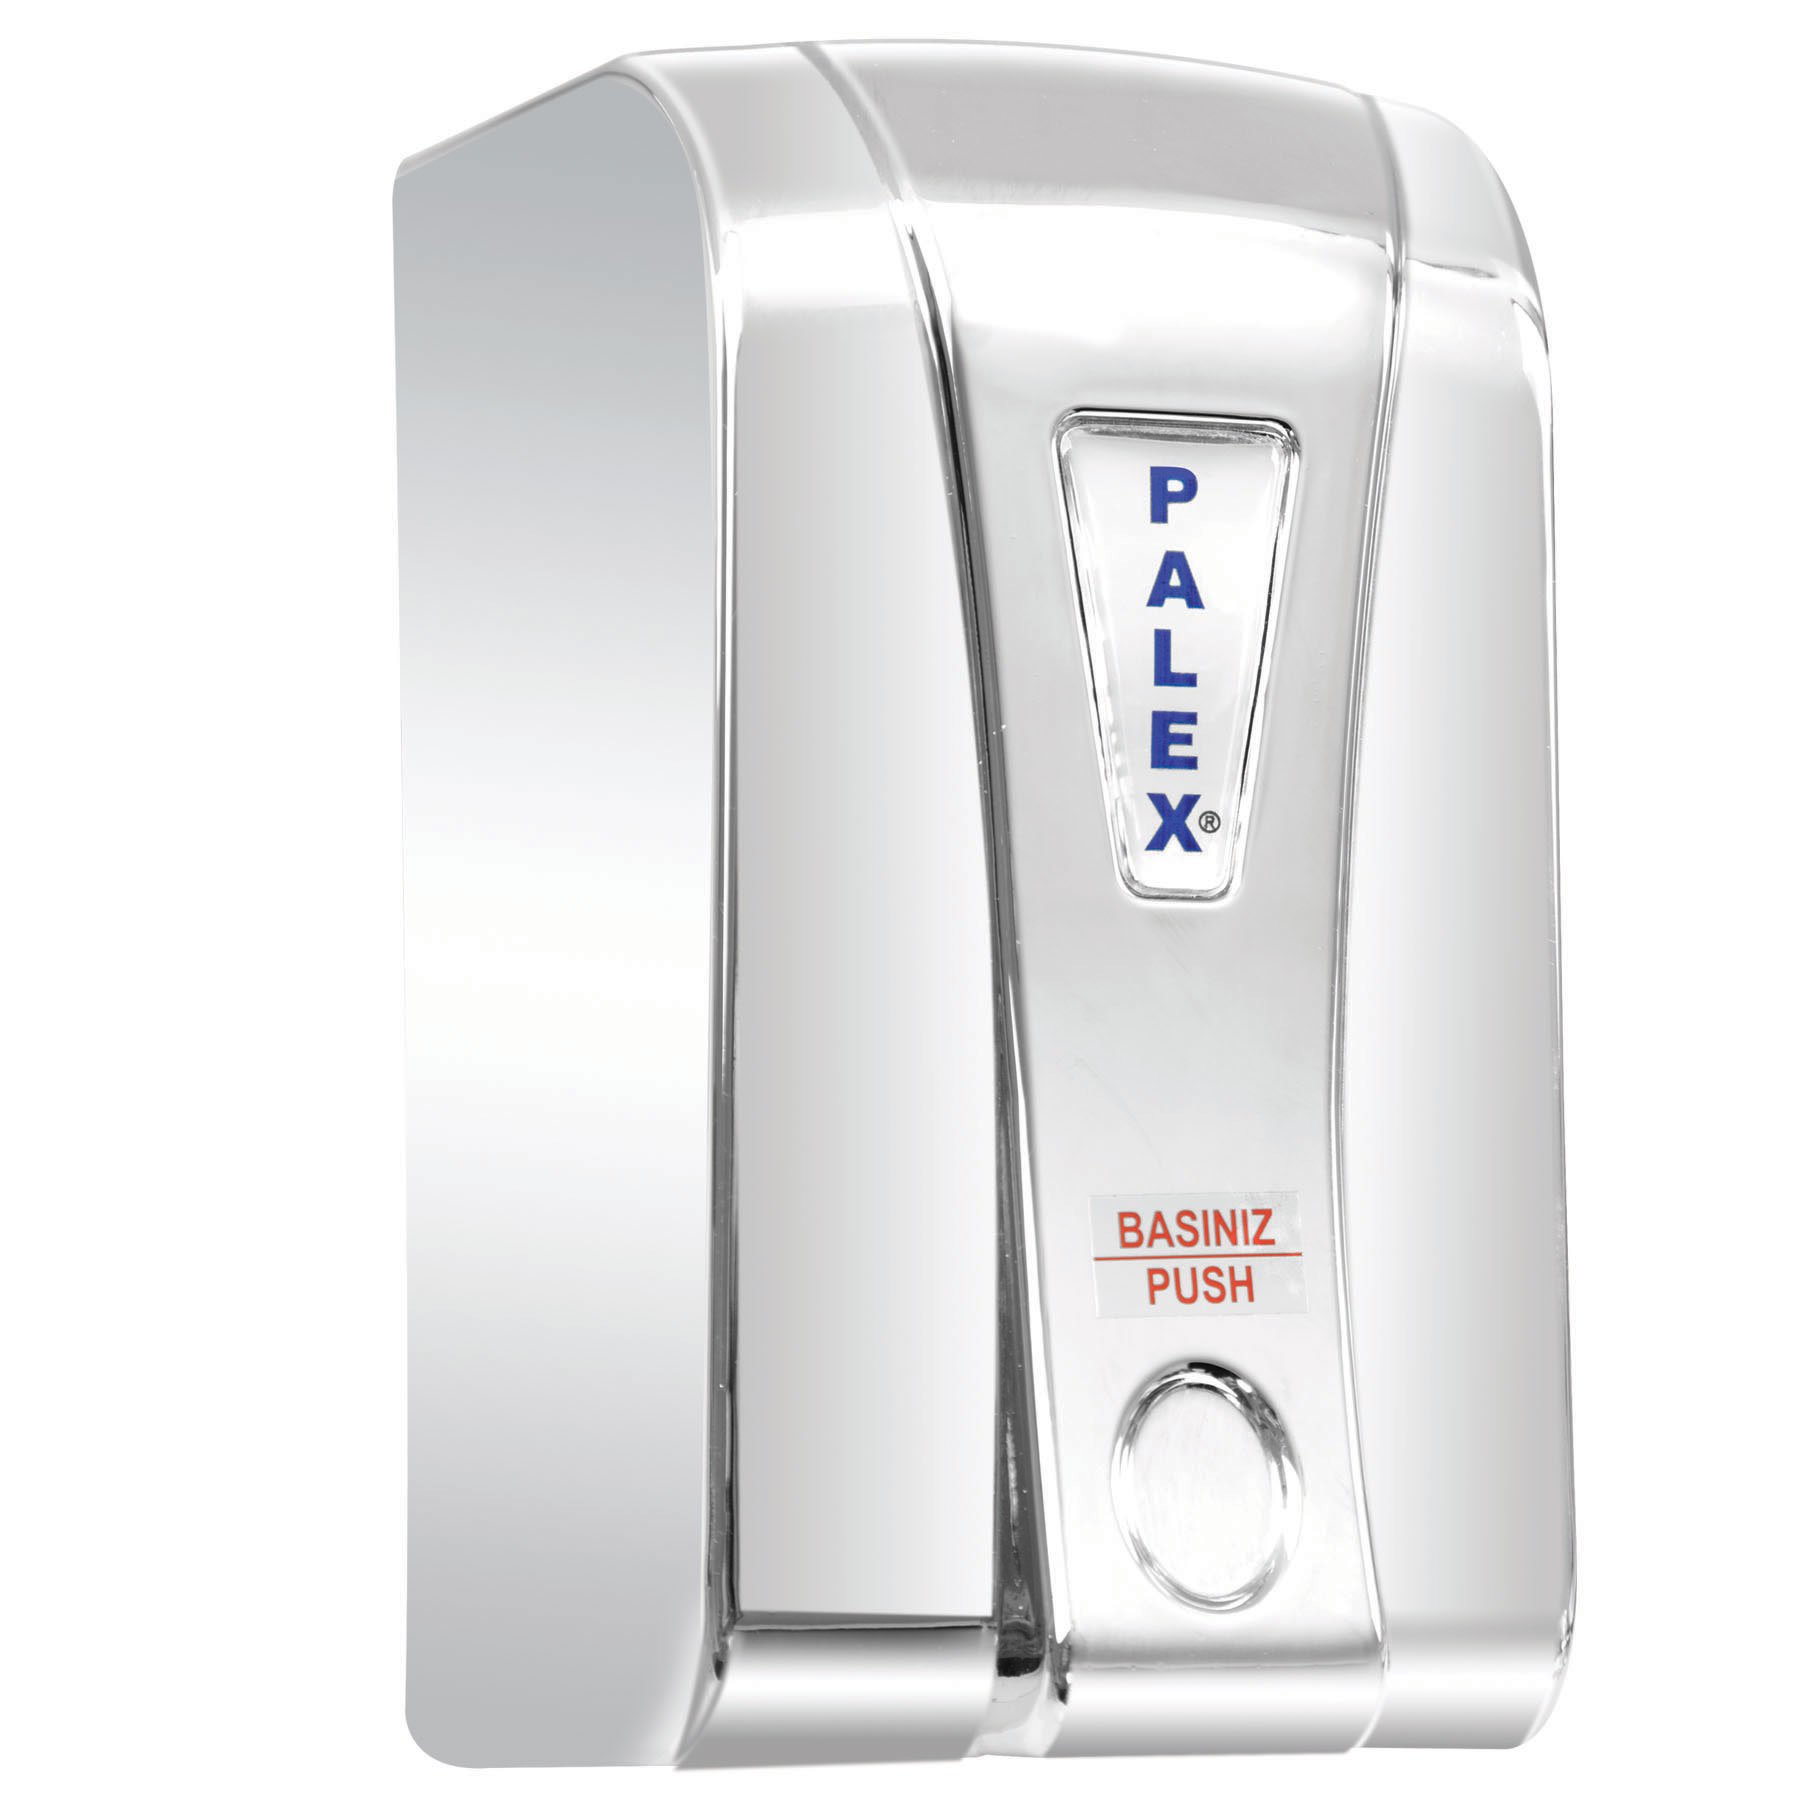 Palex Prestij Sıvı Sabun Dispenseri Krom Kaplama